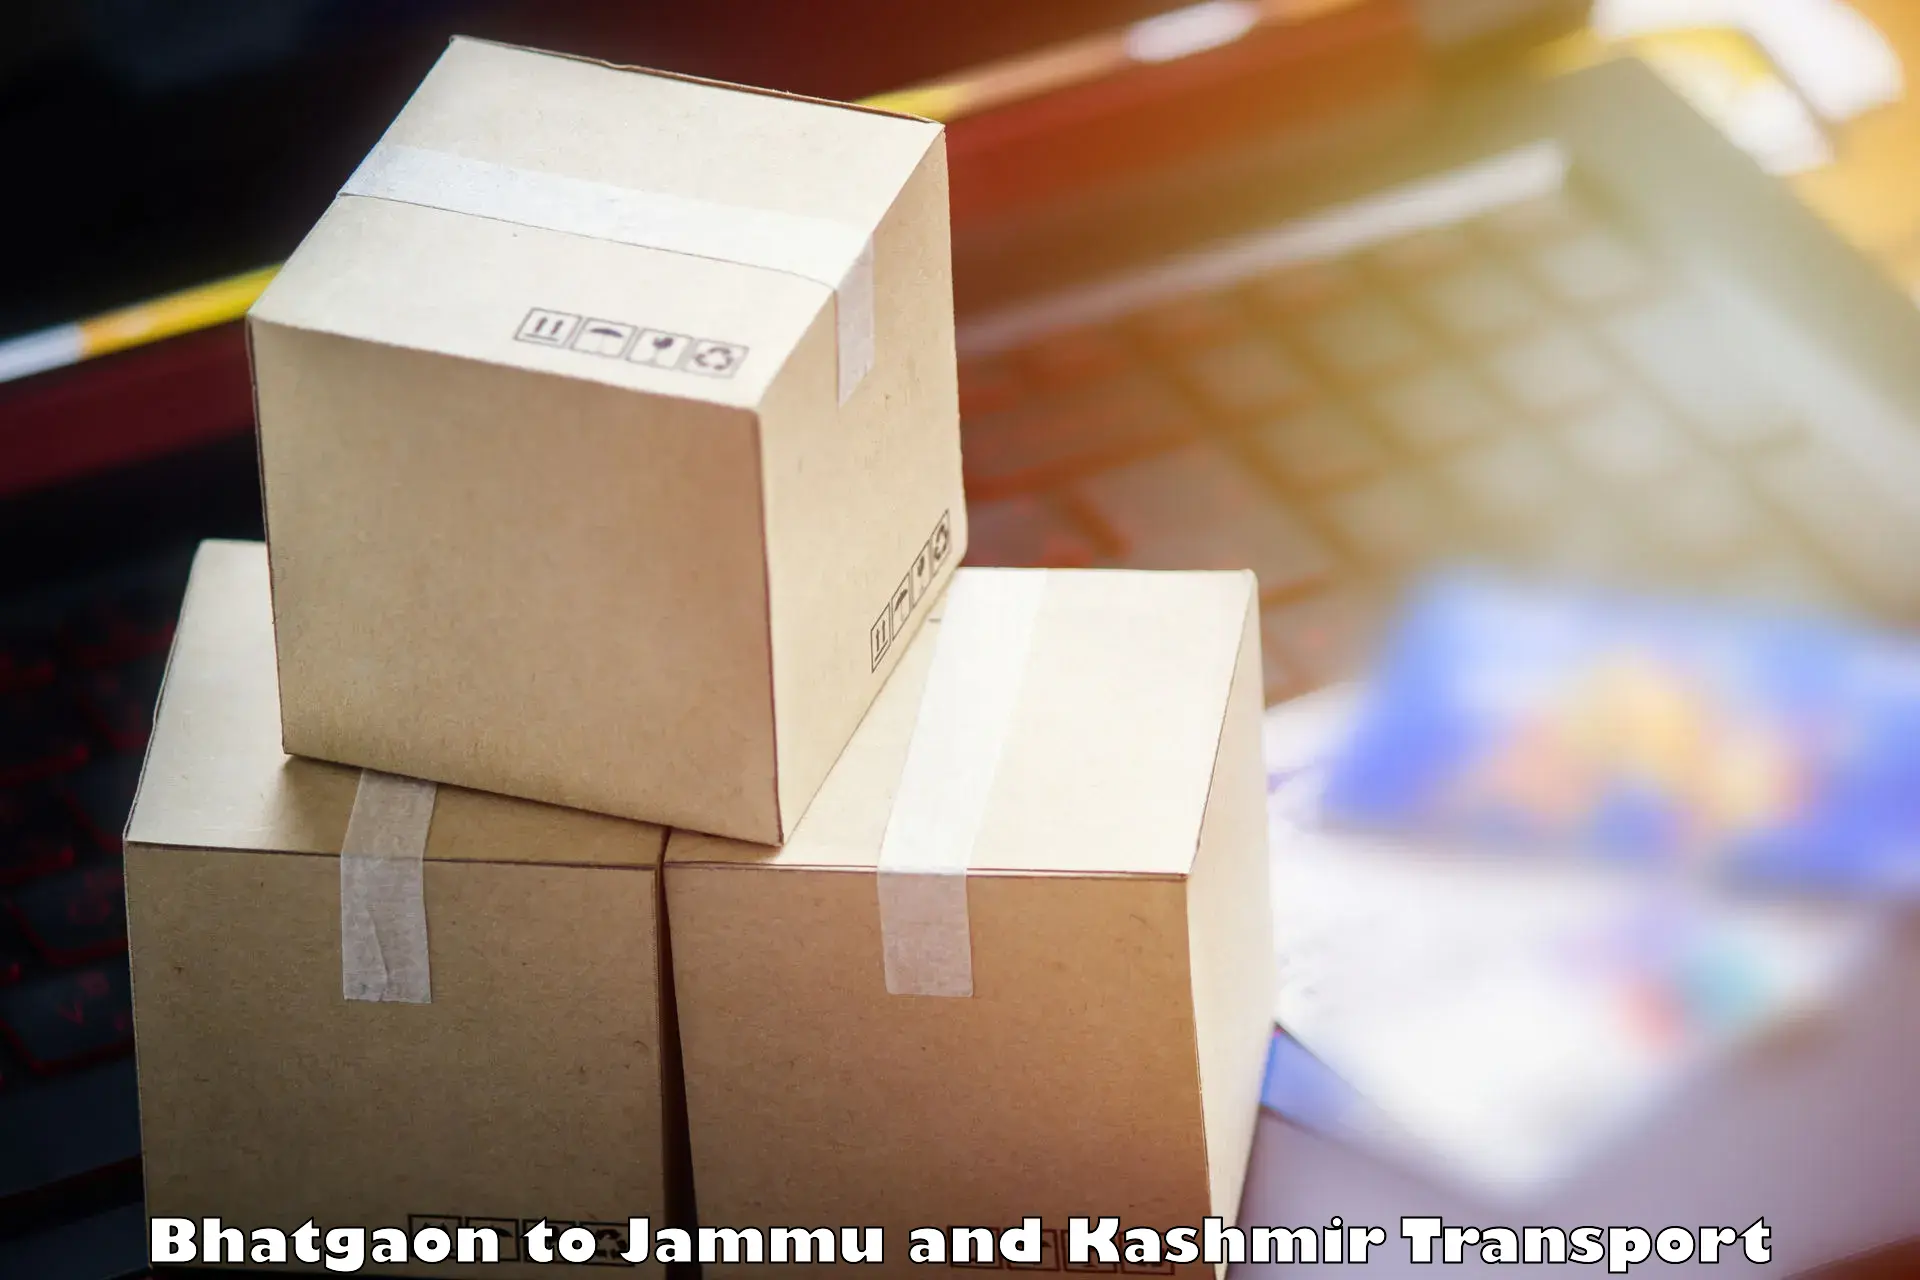 Shipping partner Bhatgaon to Katra